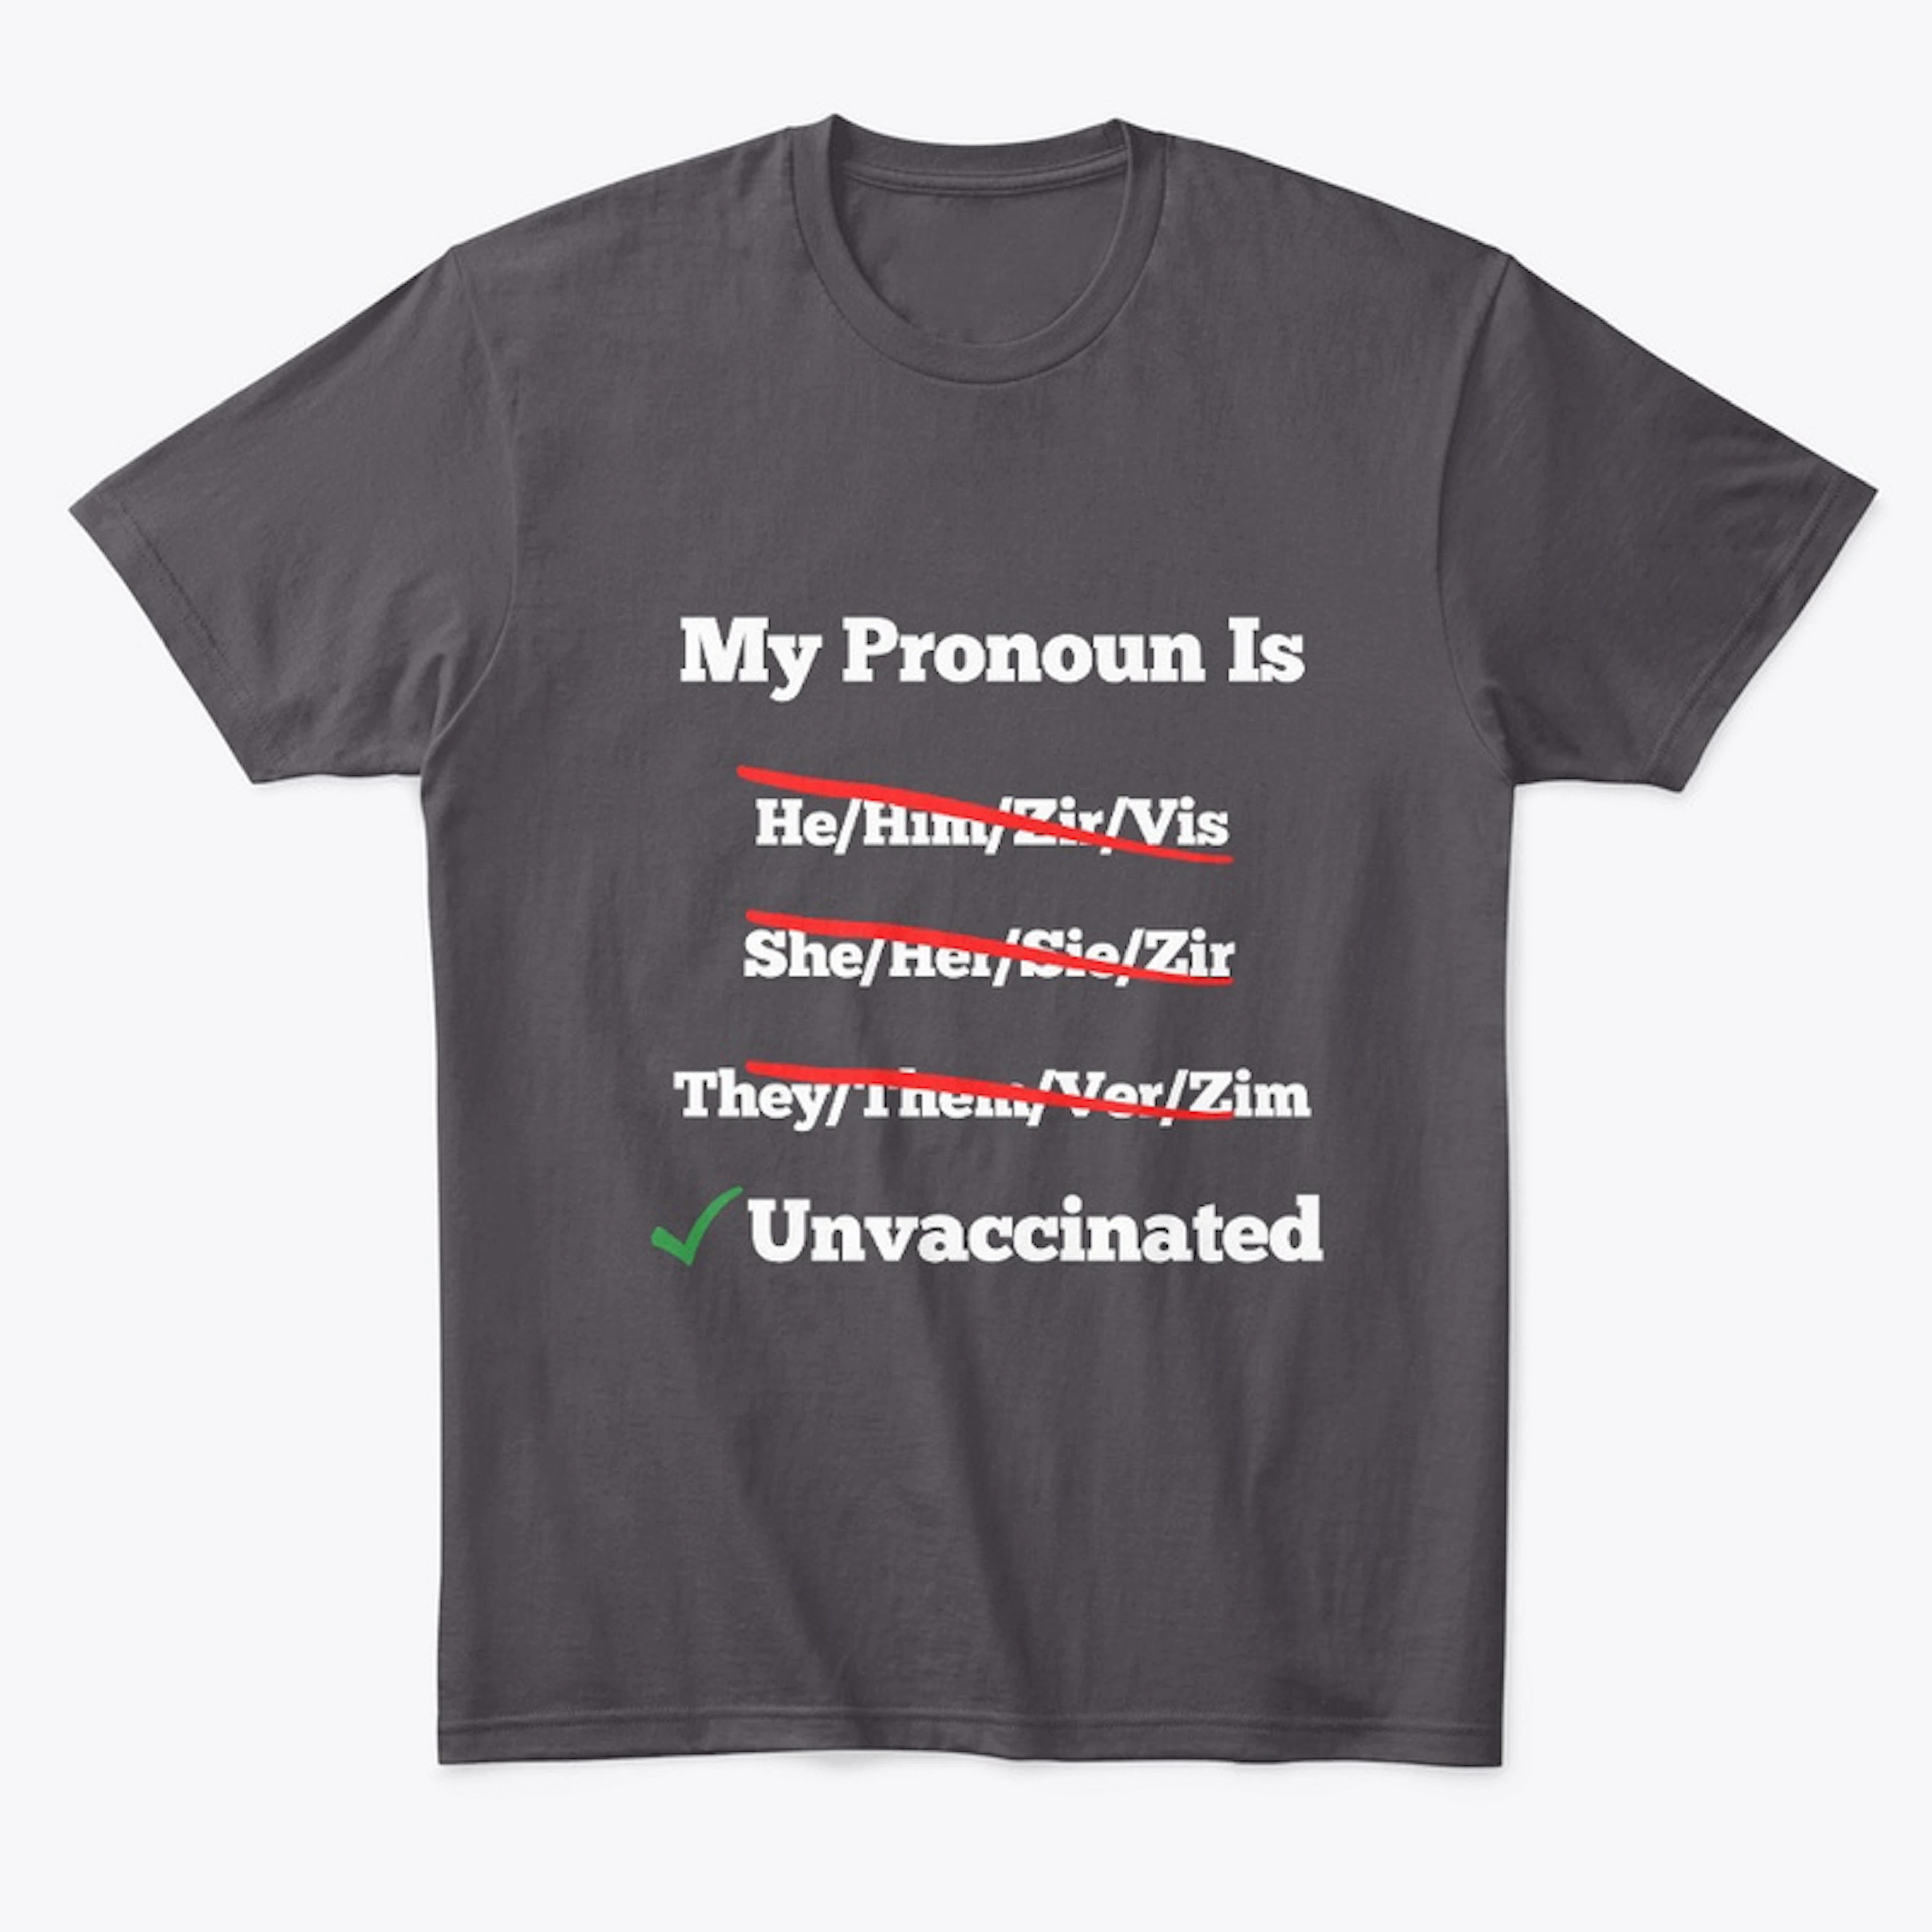 My pronoun is unvaccinated